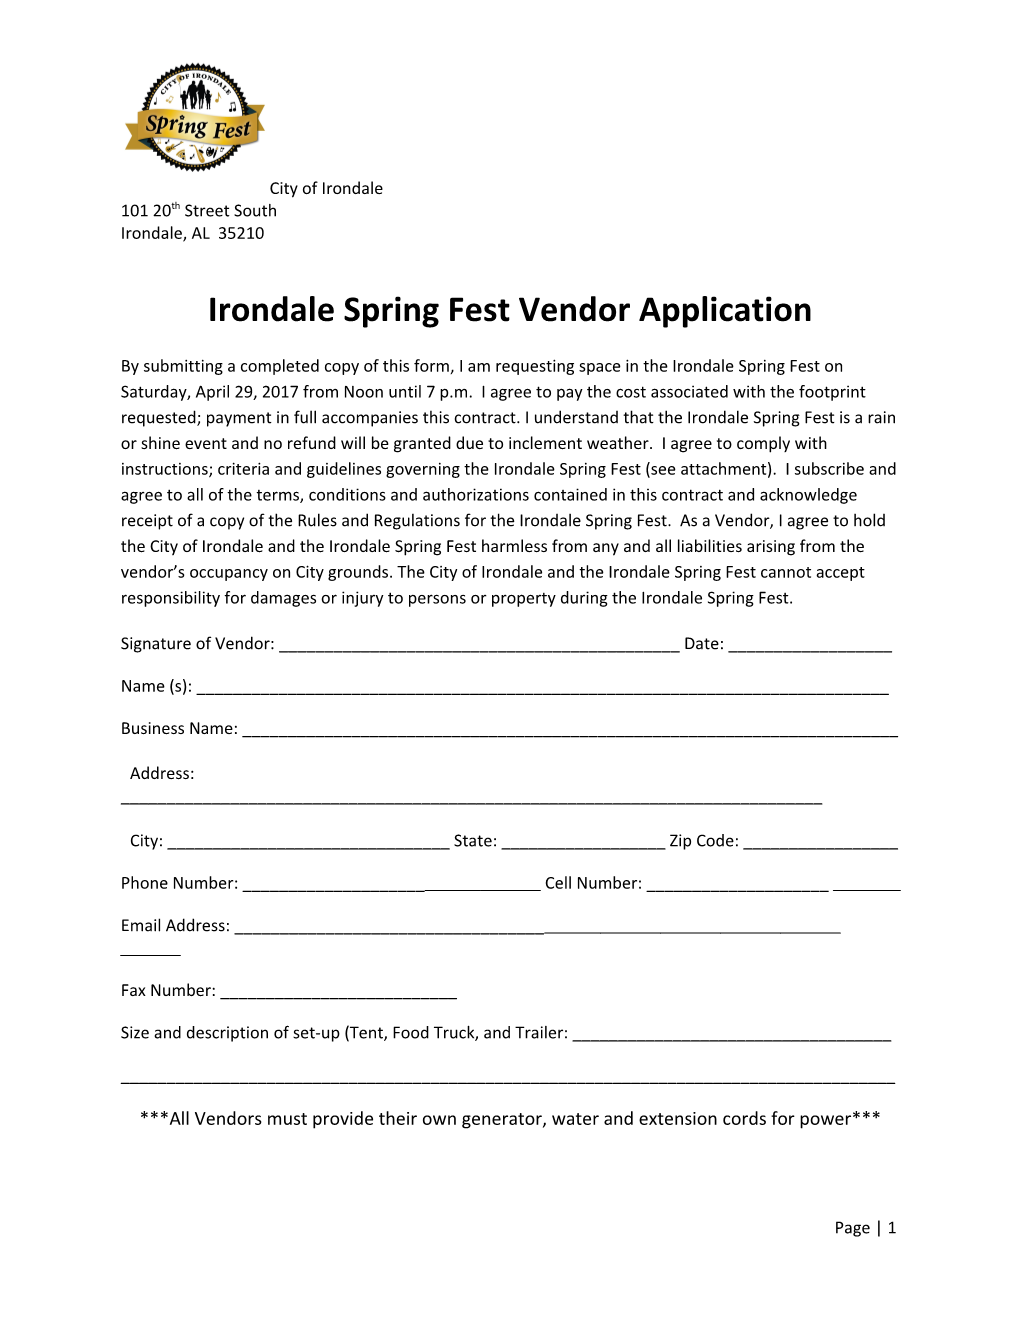 Irondale Spring Fest Vendor Application